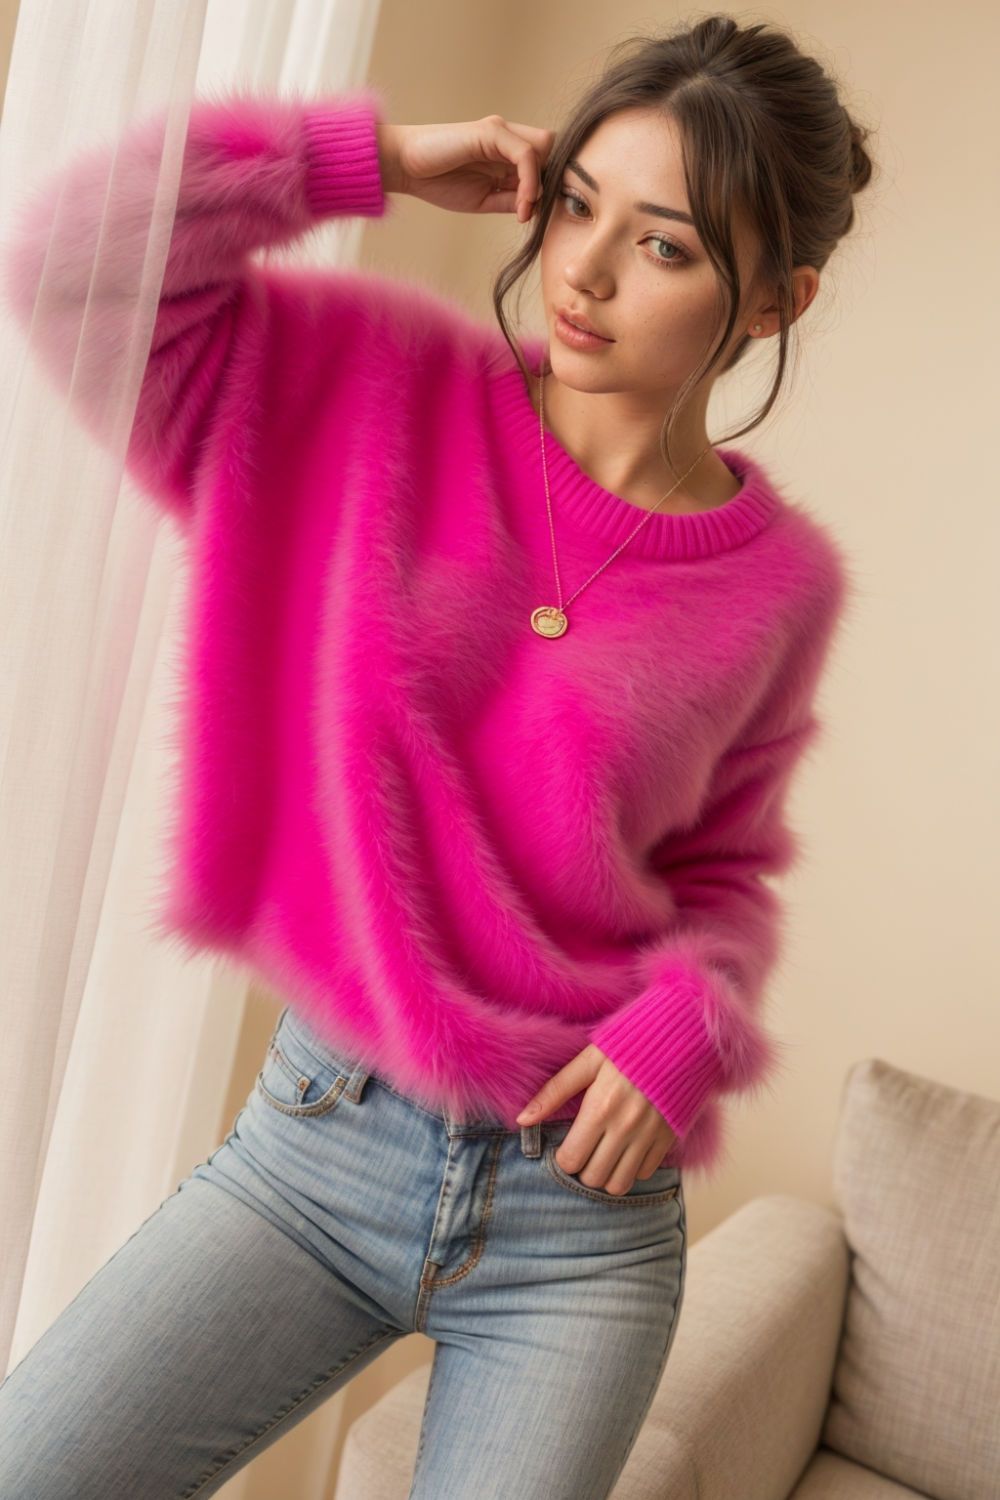 fun way hot pink fuzzy sweater